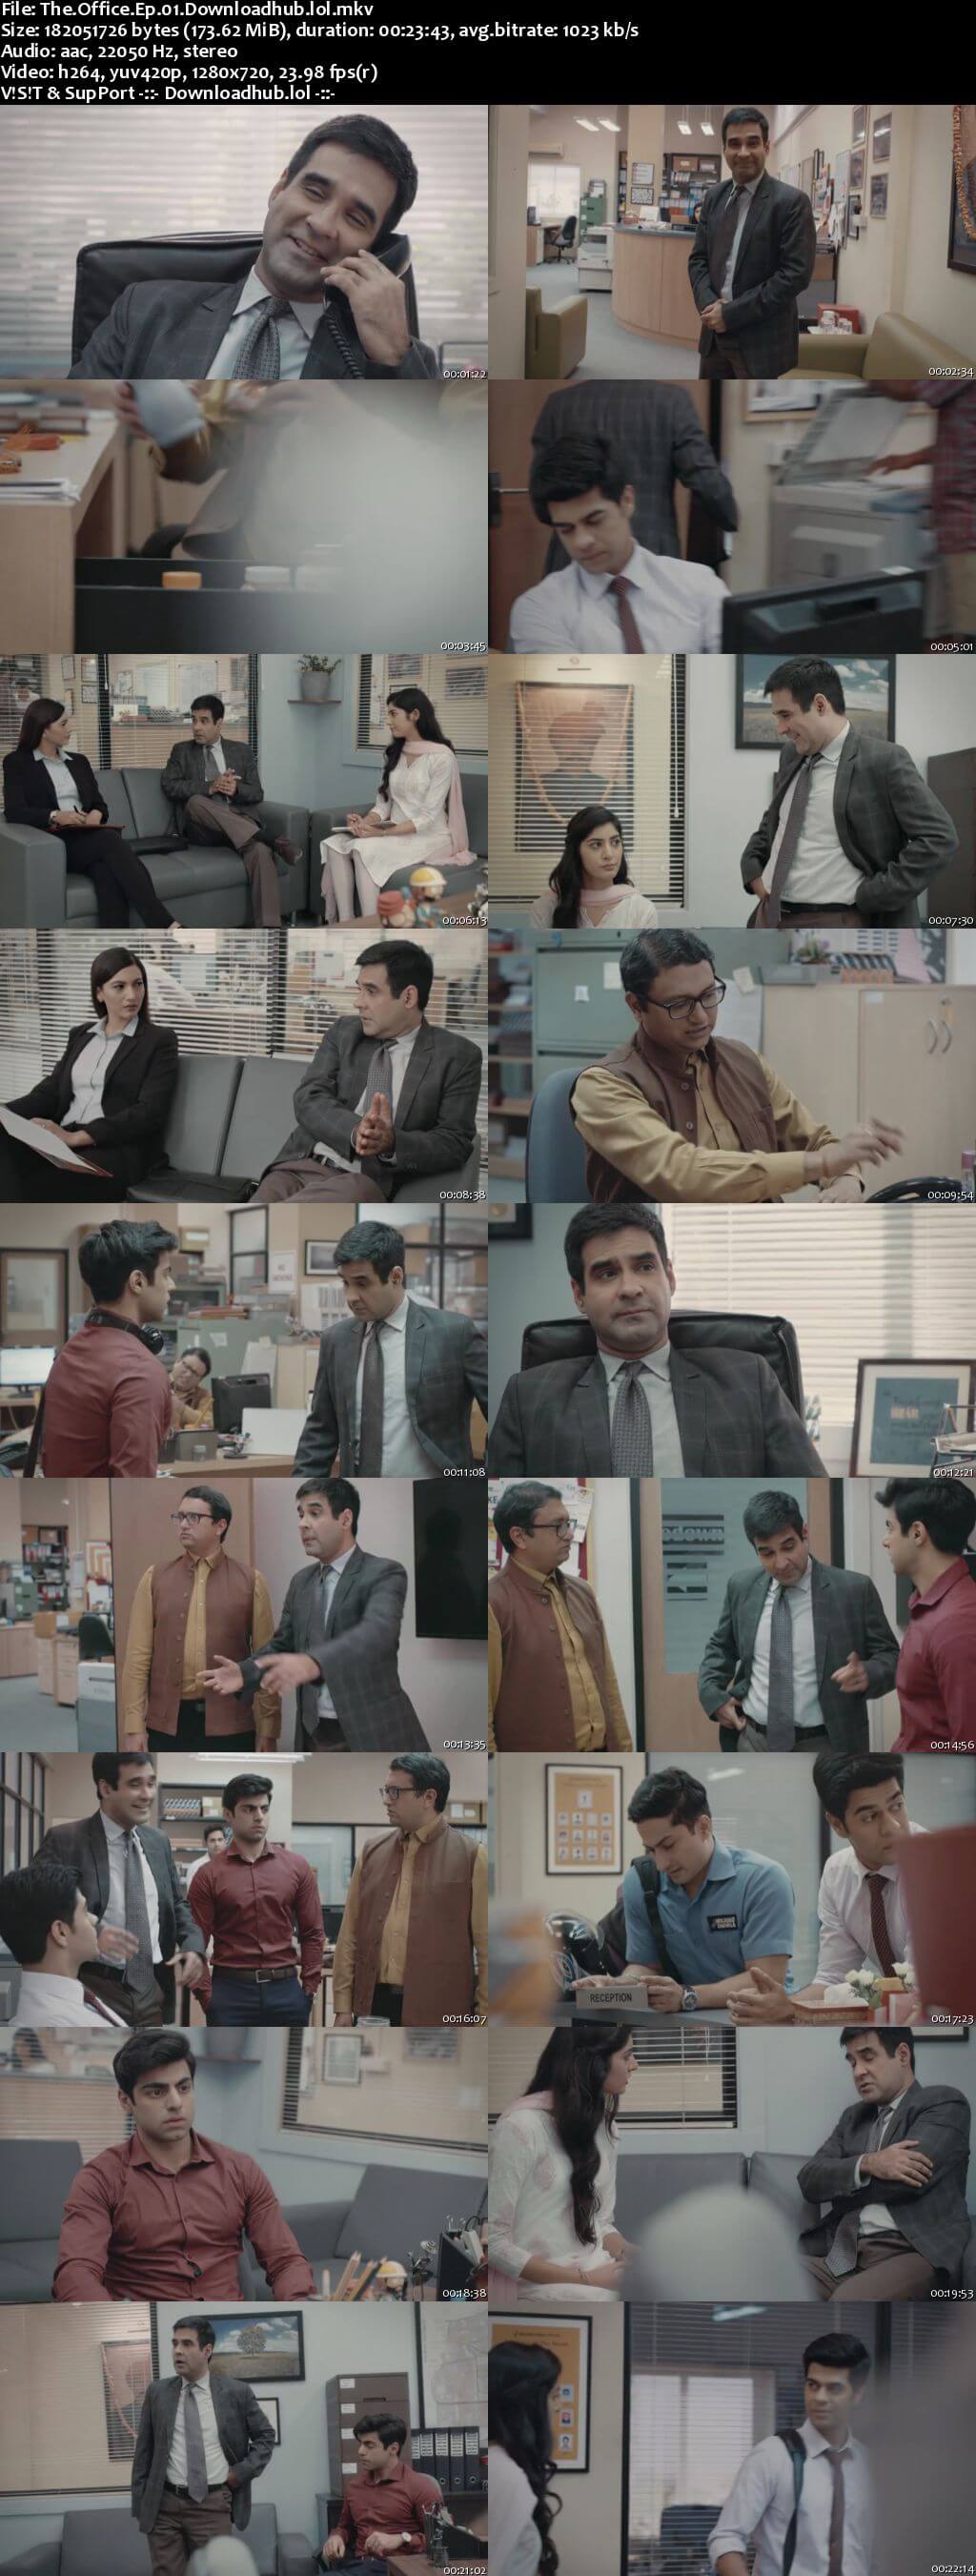 The Office 2019 Hindi Season 01 Complete 720p HDRip x264